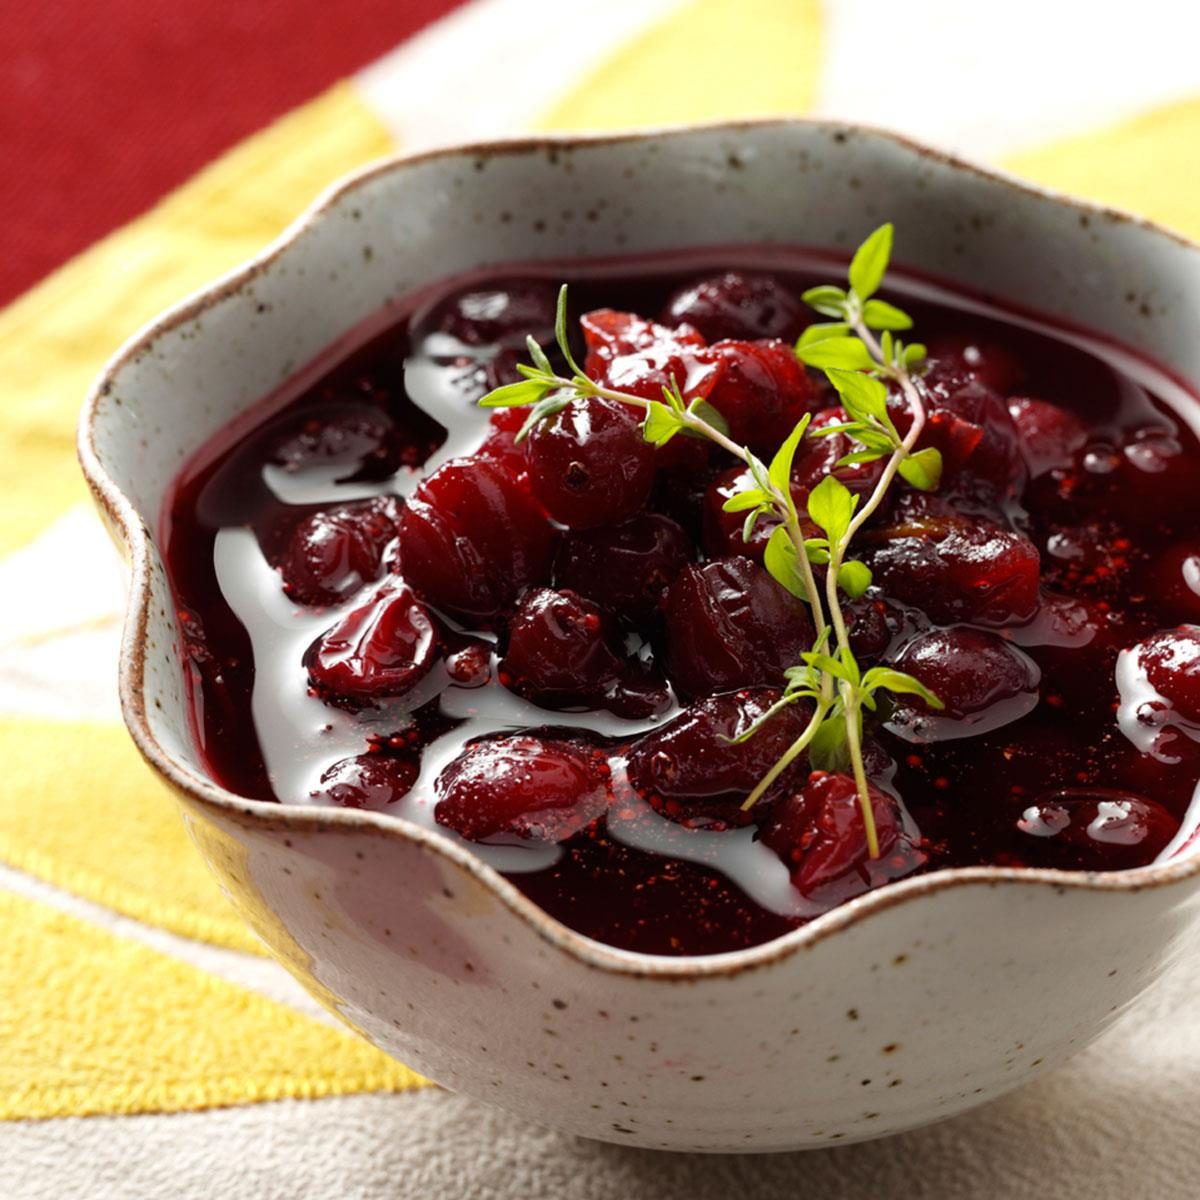 Cranberry Chutney Recipe: How to Make It